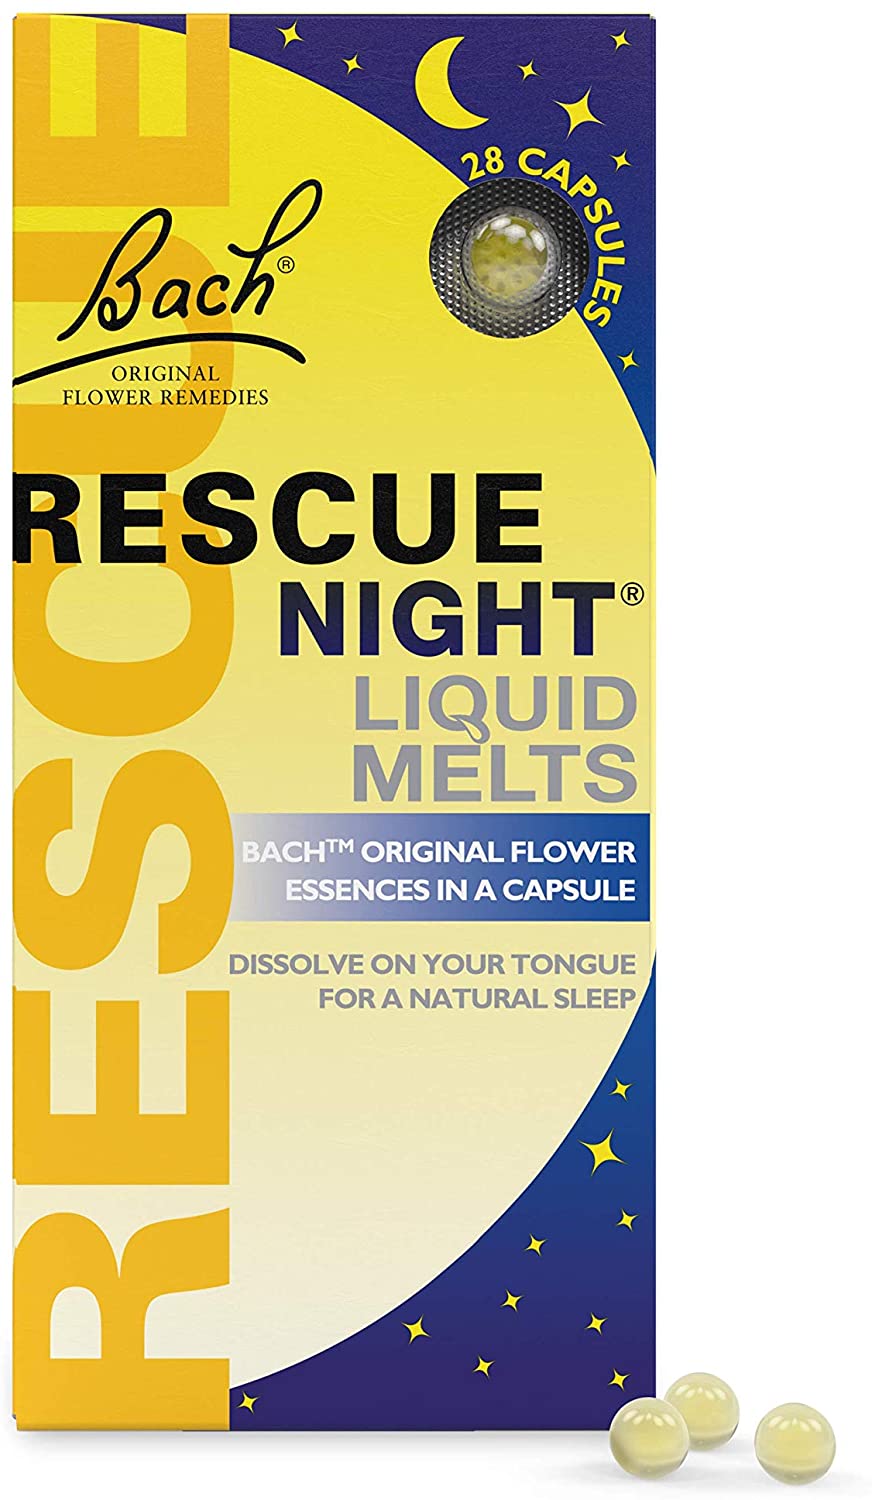 Rescue Night Melts – Urenus